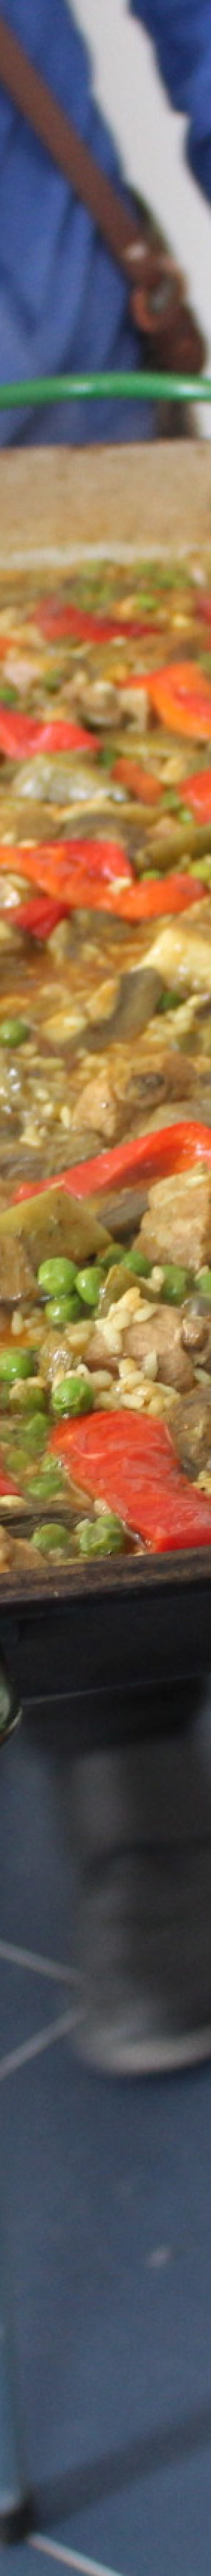 Paella-Essen